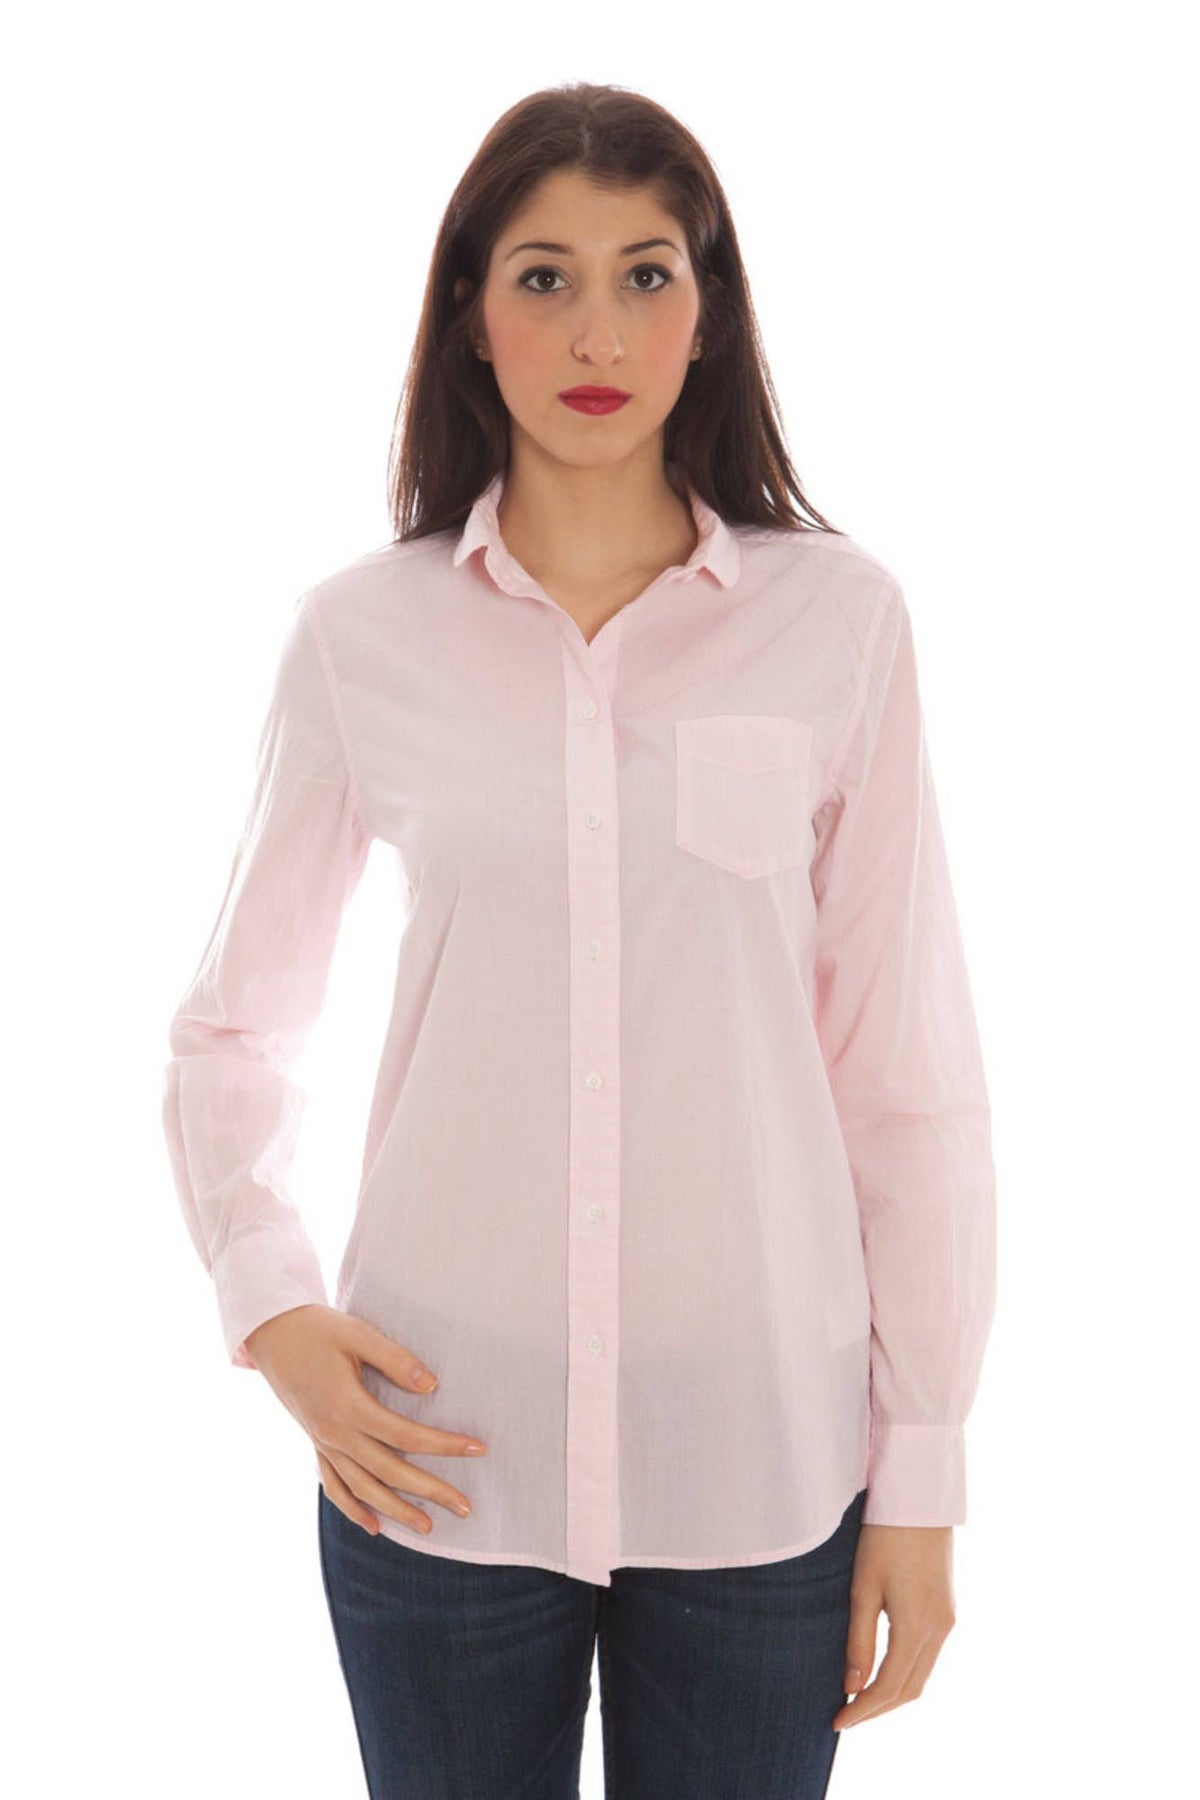 Gant Damen Hemd Bluse Freizeithemd Businesshemd, langarm